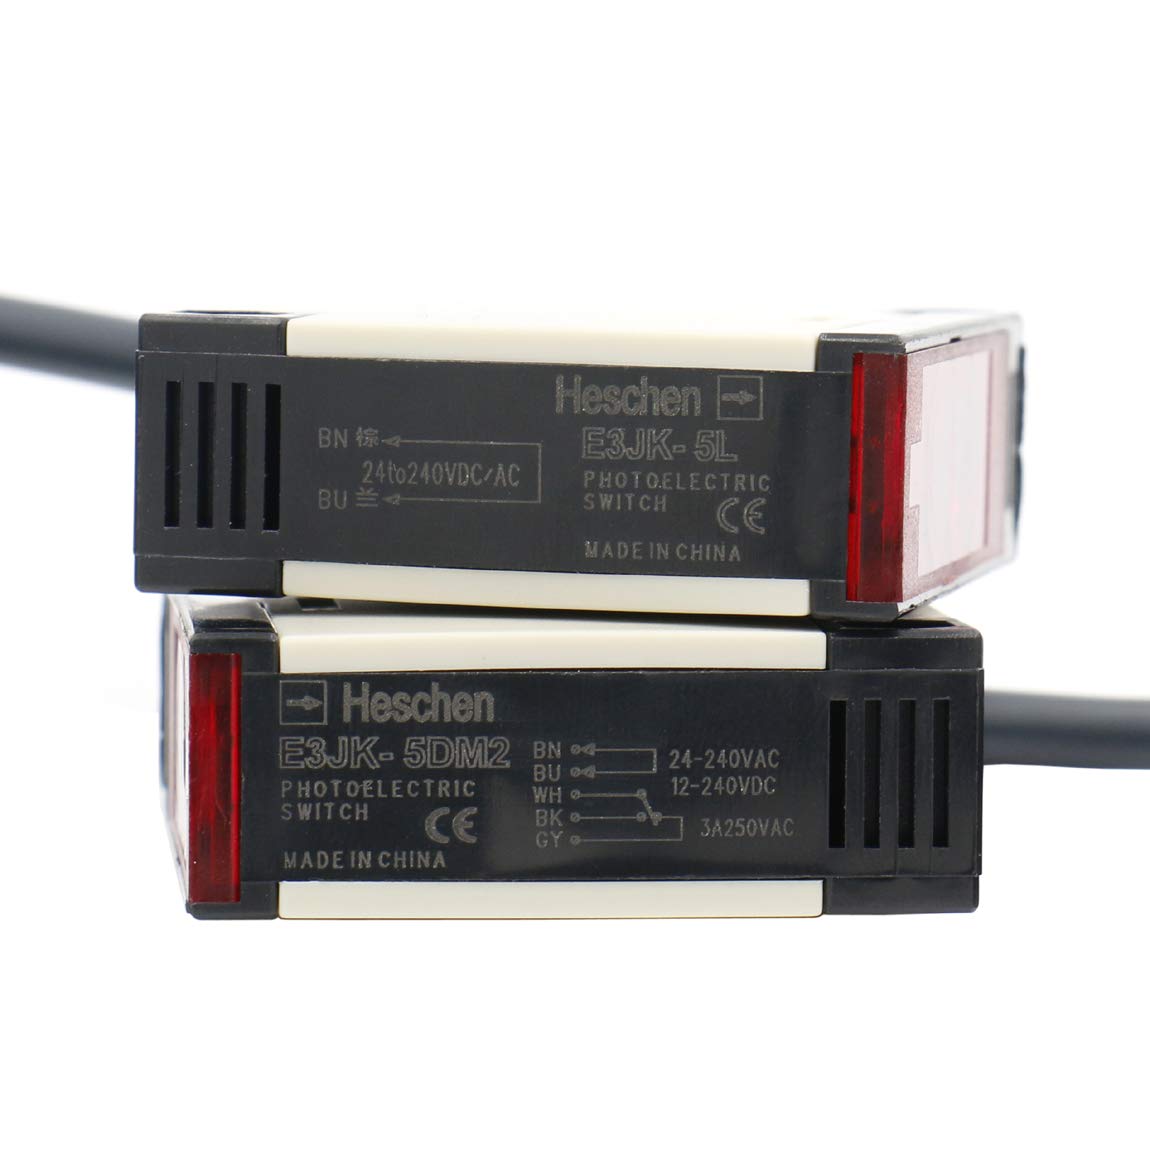 Heschen Fotoelektrischer Schalter, E3JK-5DM2-5L, 24-240VAC/12-240VDC, Bijection Type, Detection Distance 5M